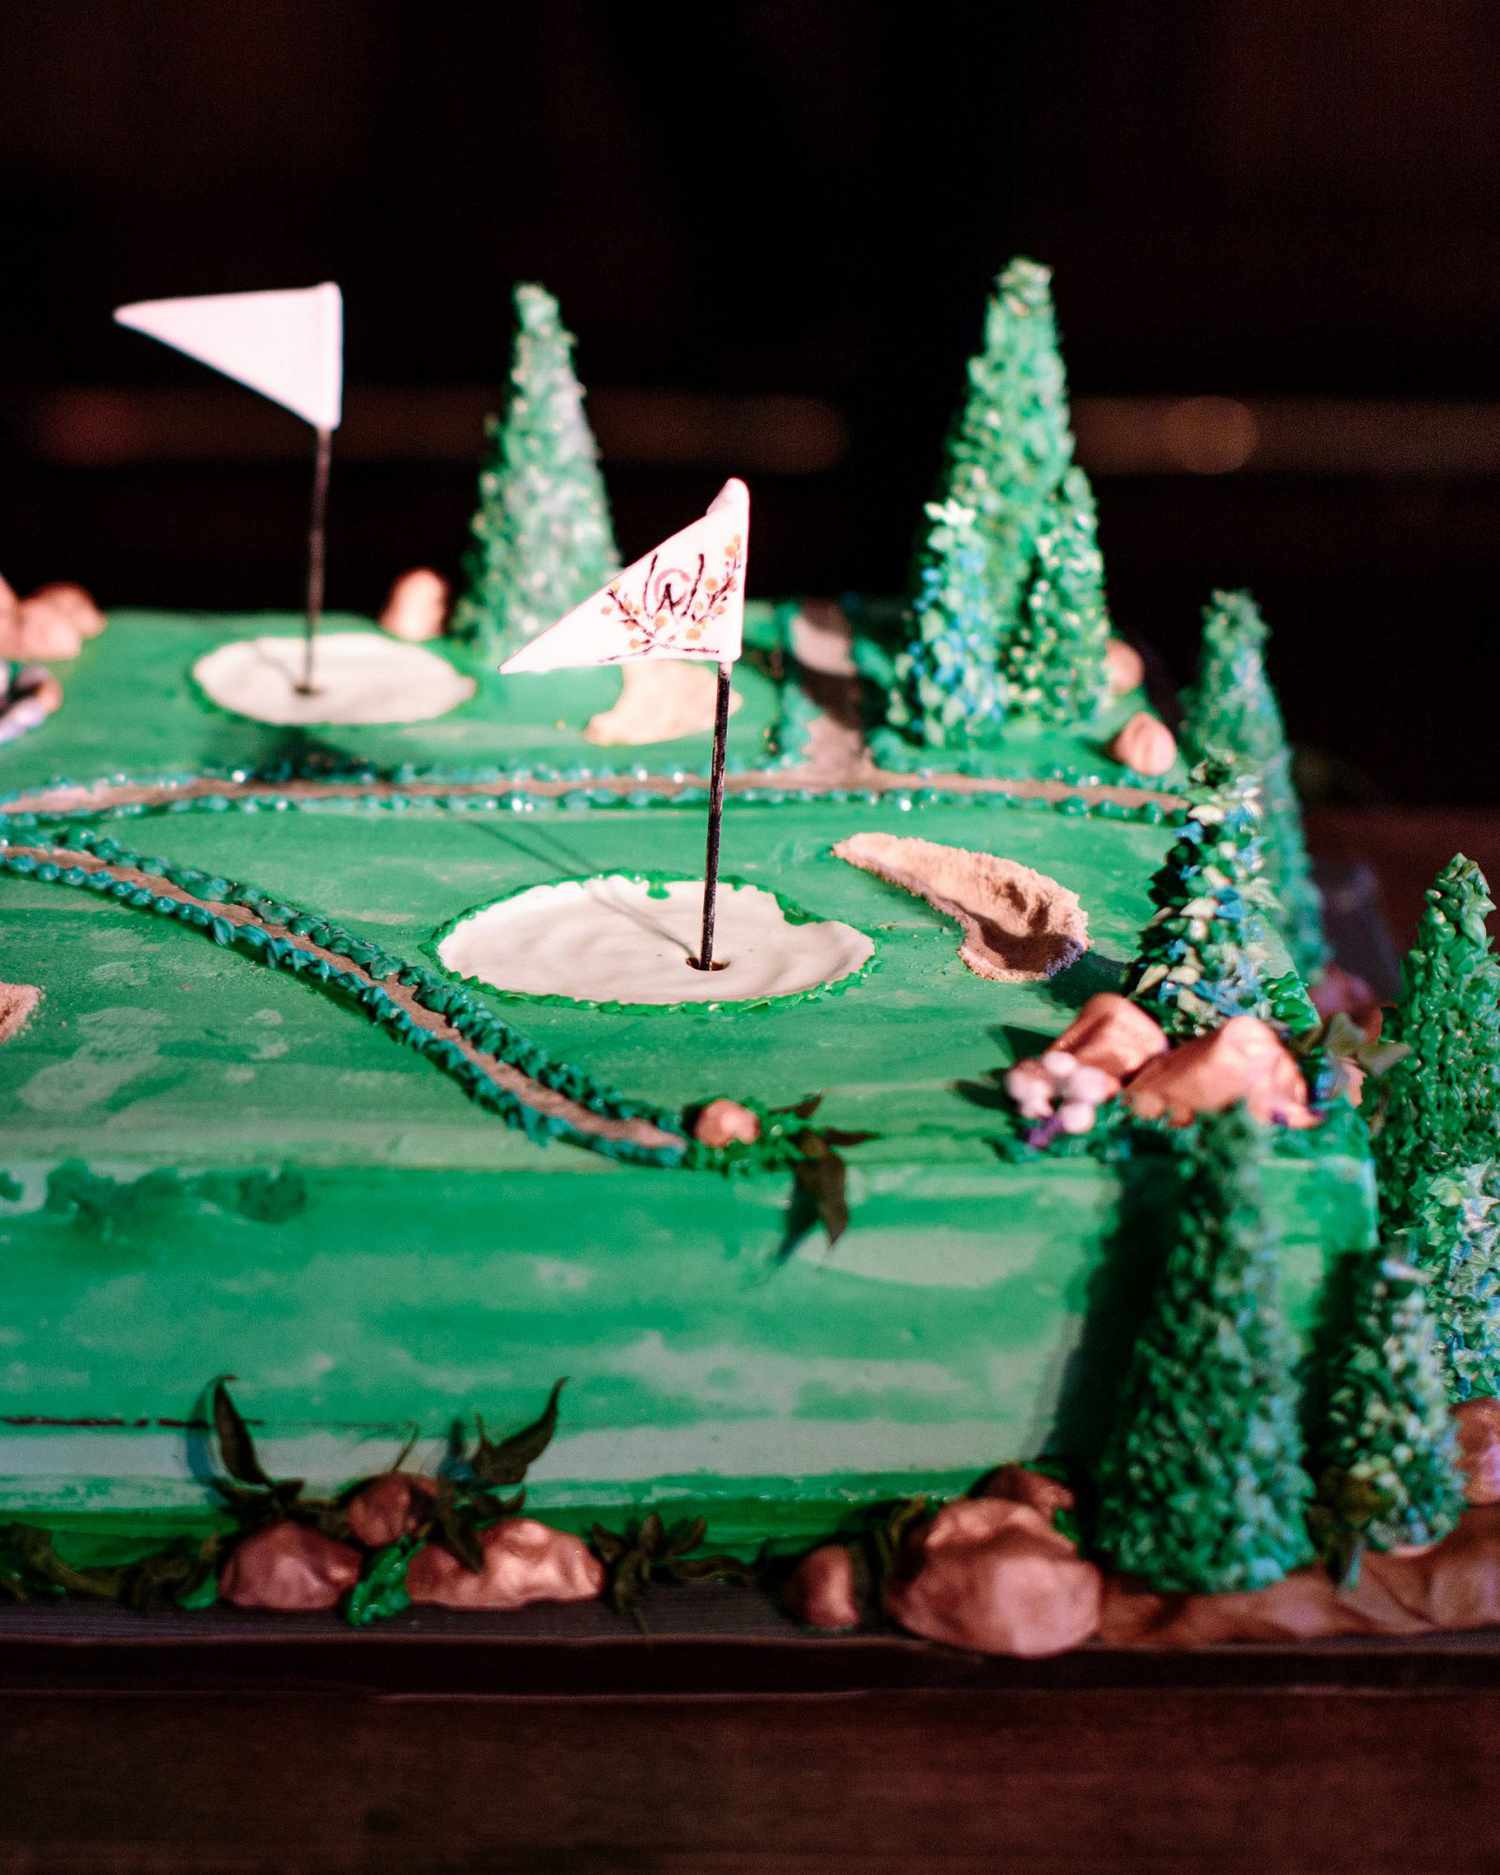 grooms cake golf